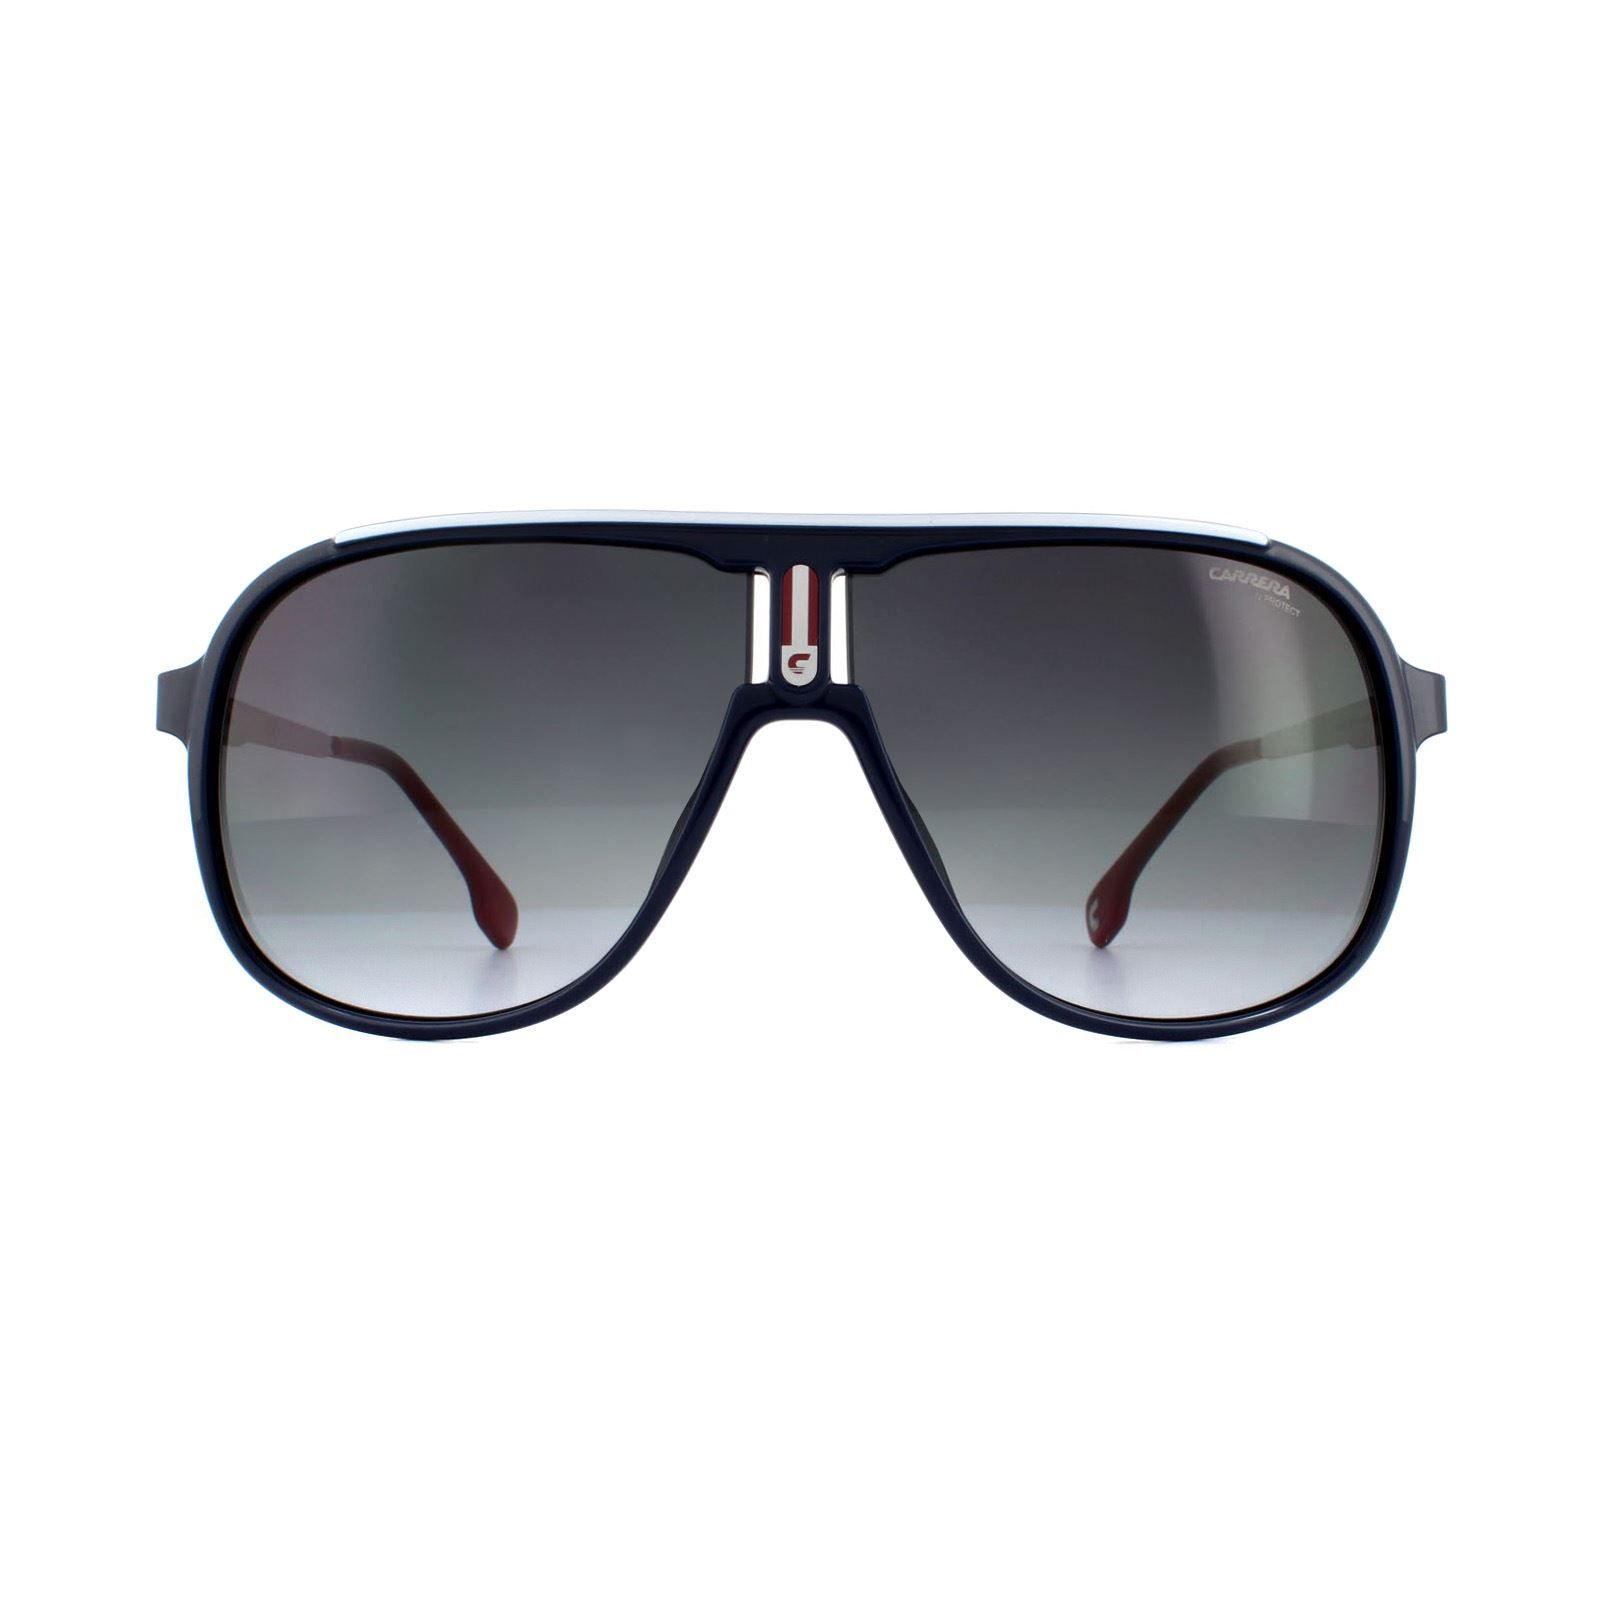 Carrera Sunglasses 1007/S PJP 9O Blue Silver Dark Grey Gradient